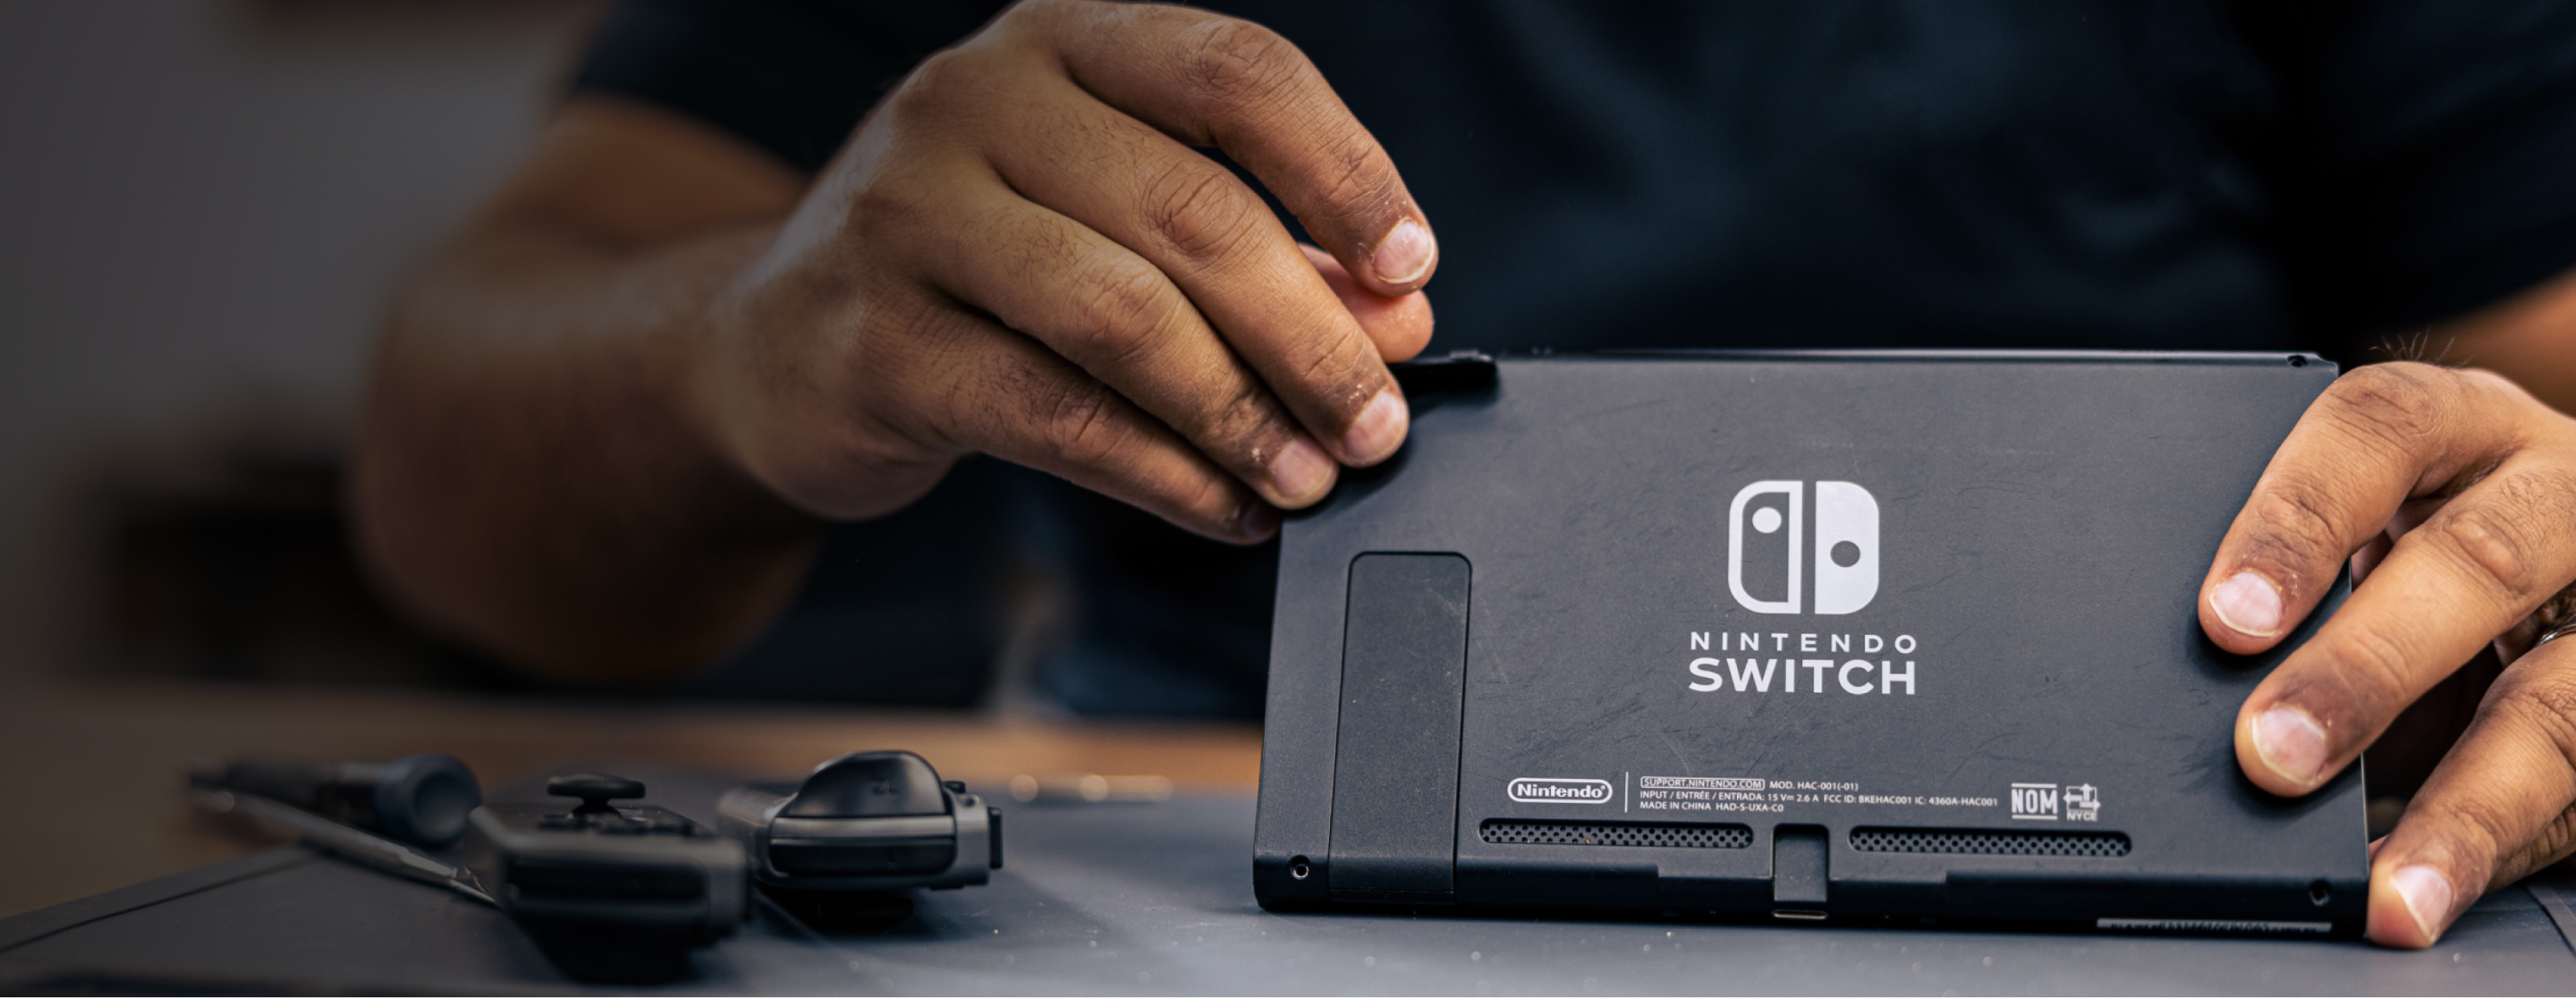 Nintendo Switch Repair - iFixit